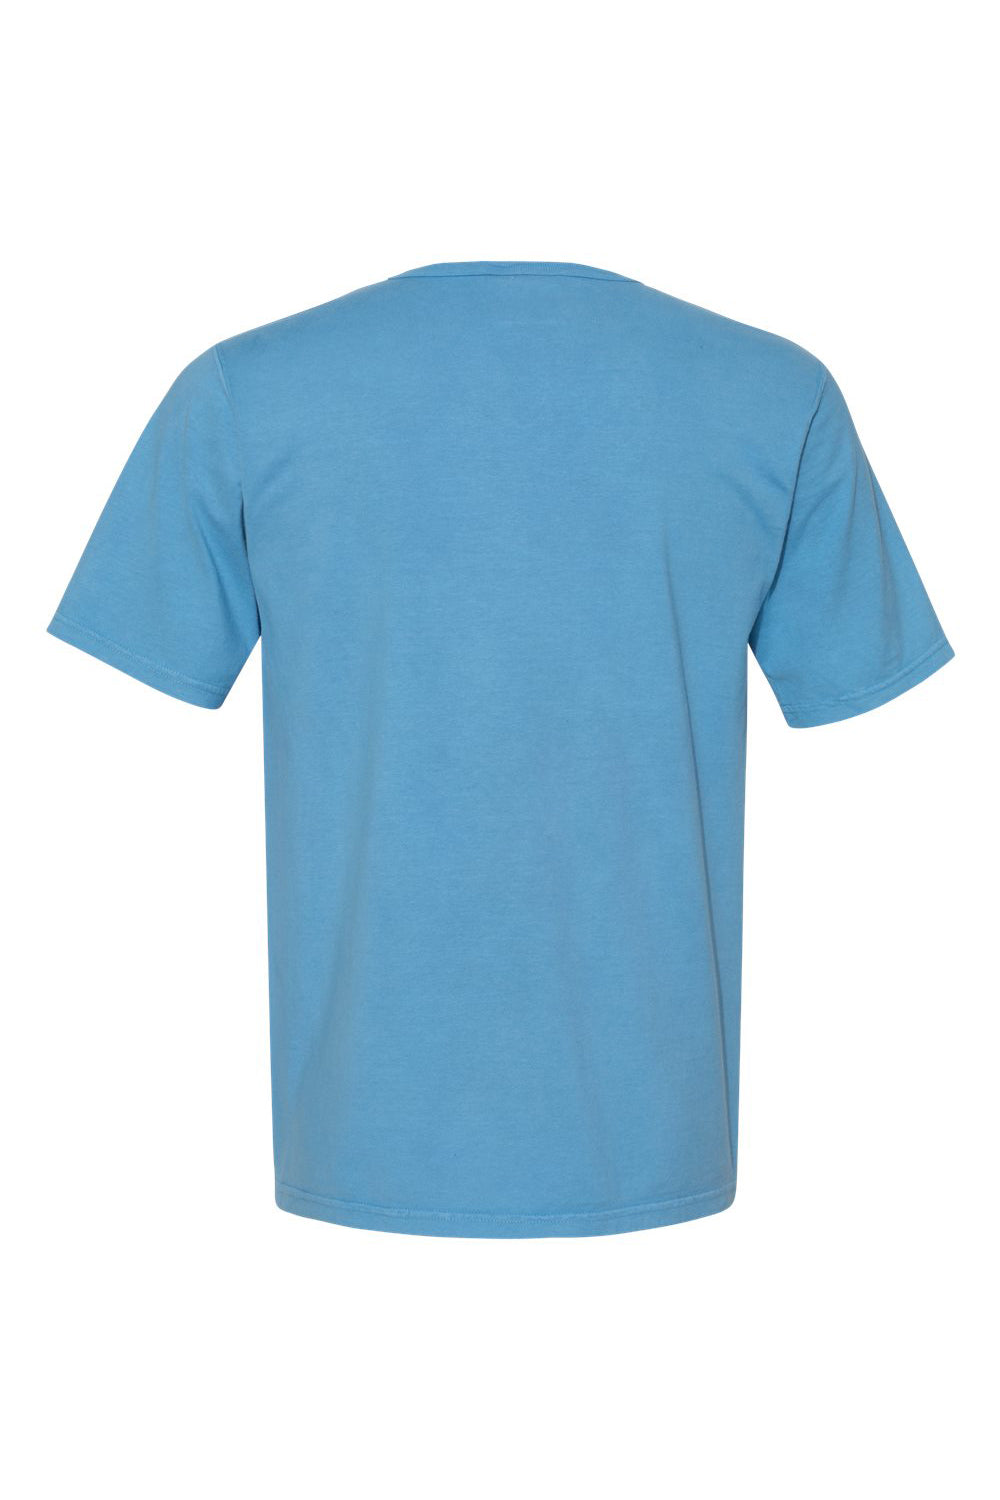 Champion CD100 Mens Garment Dyed Short Sleeve Crewneck T-Shirt Delicate Blue Flat Back